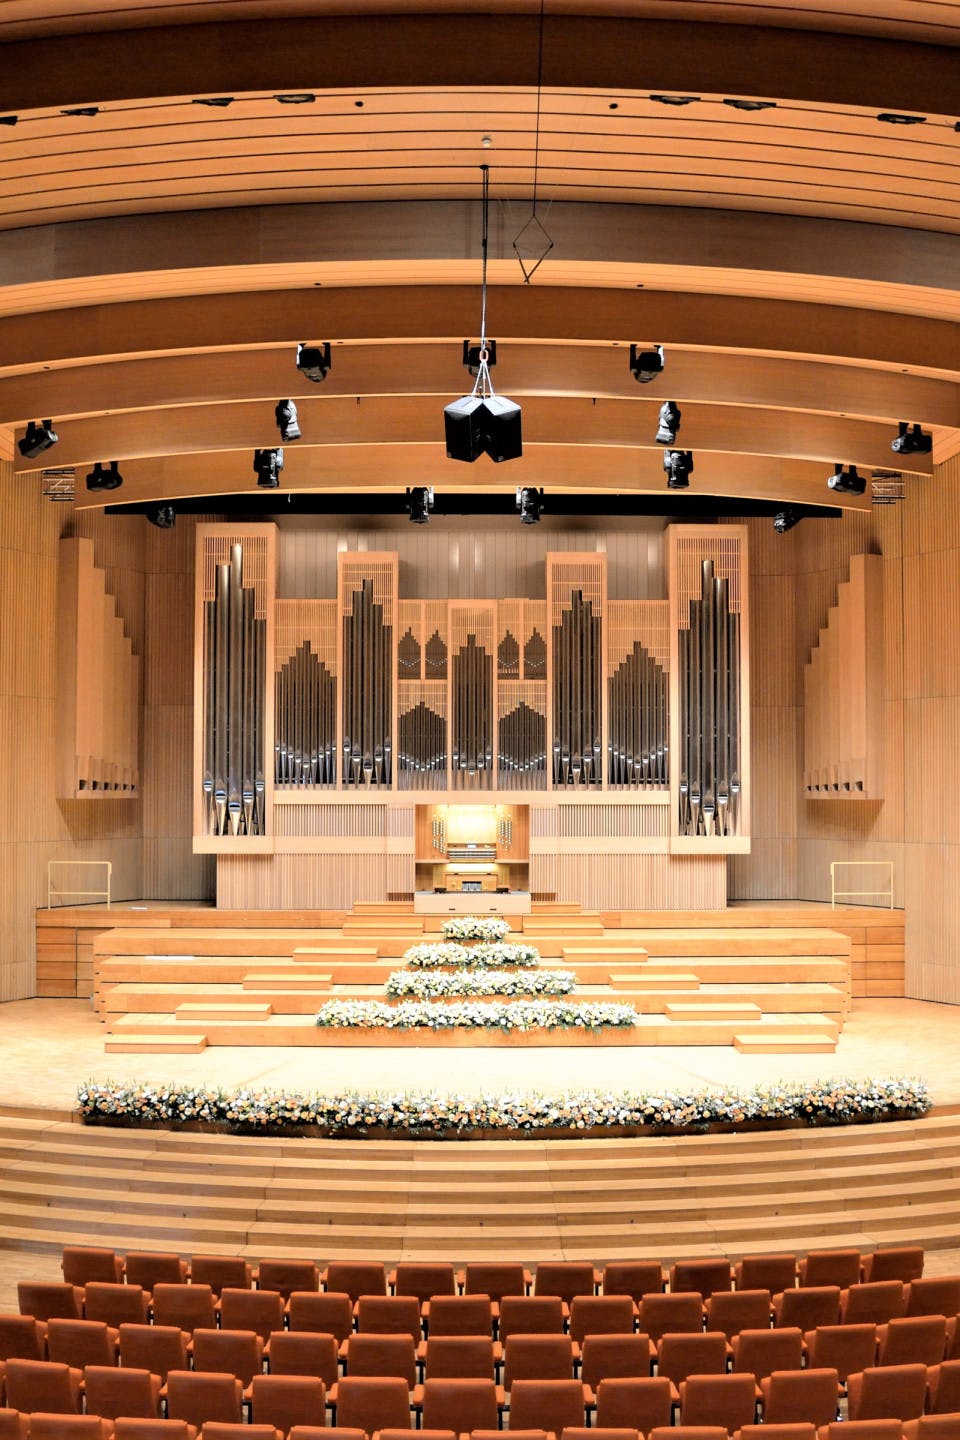 Concert hall organs